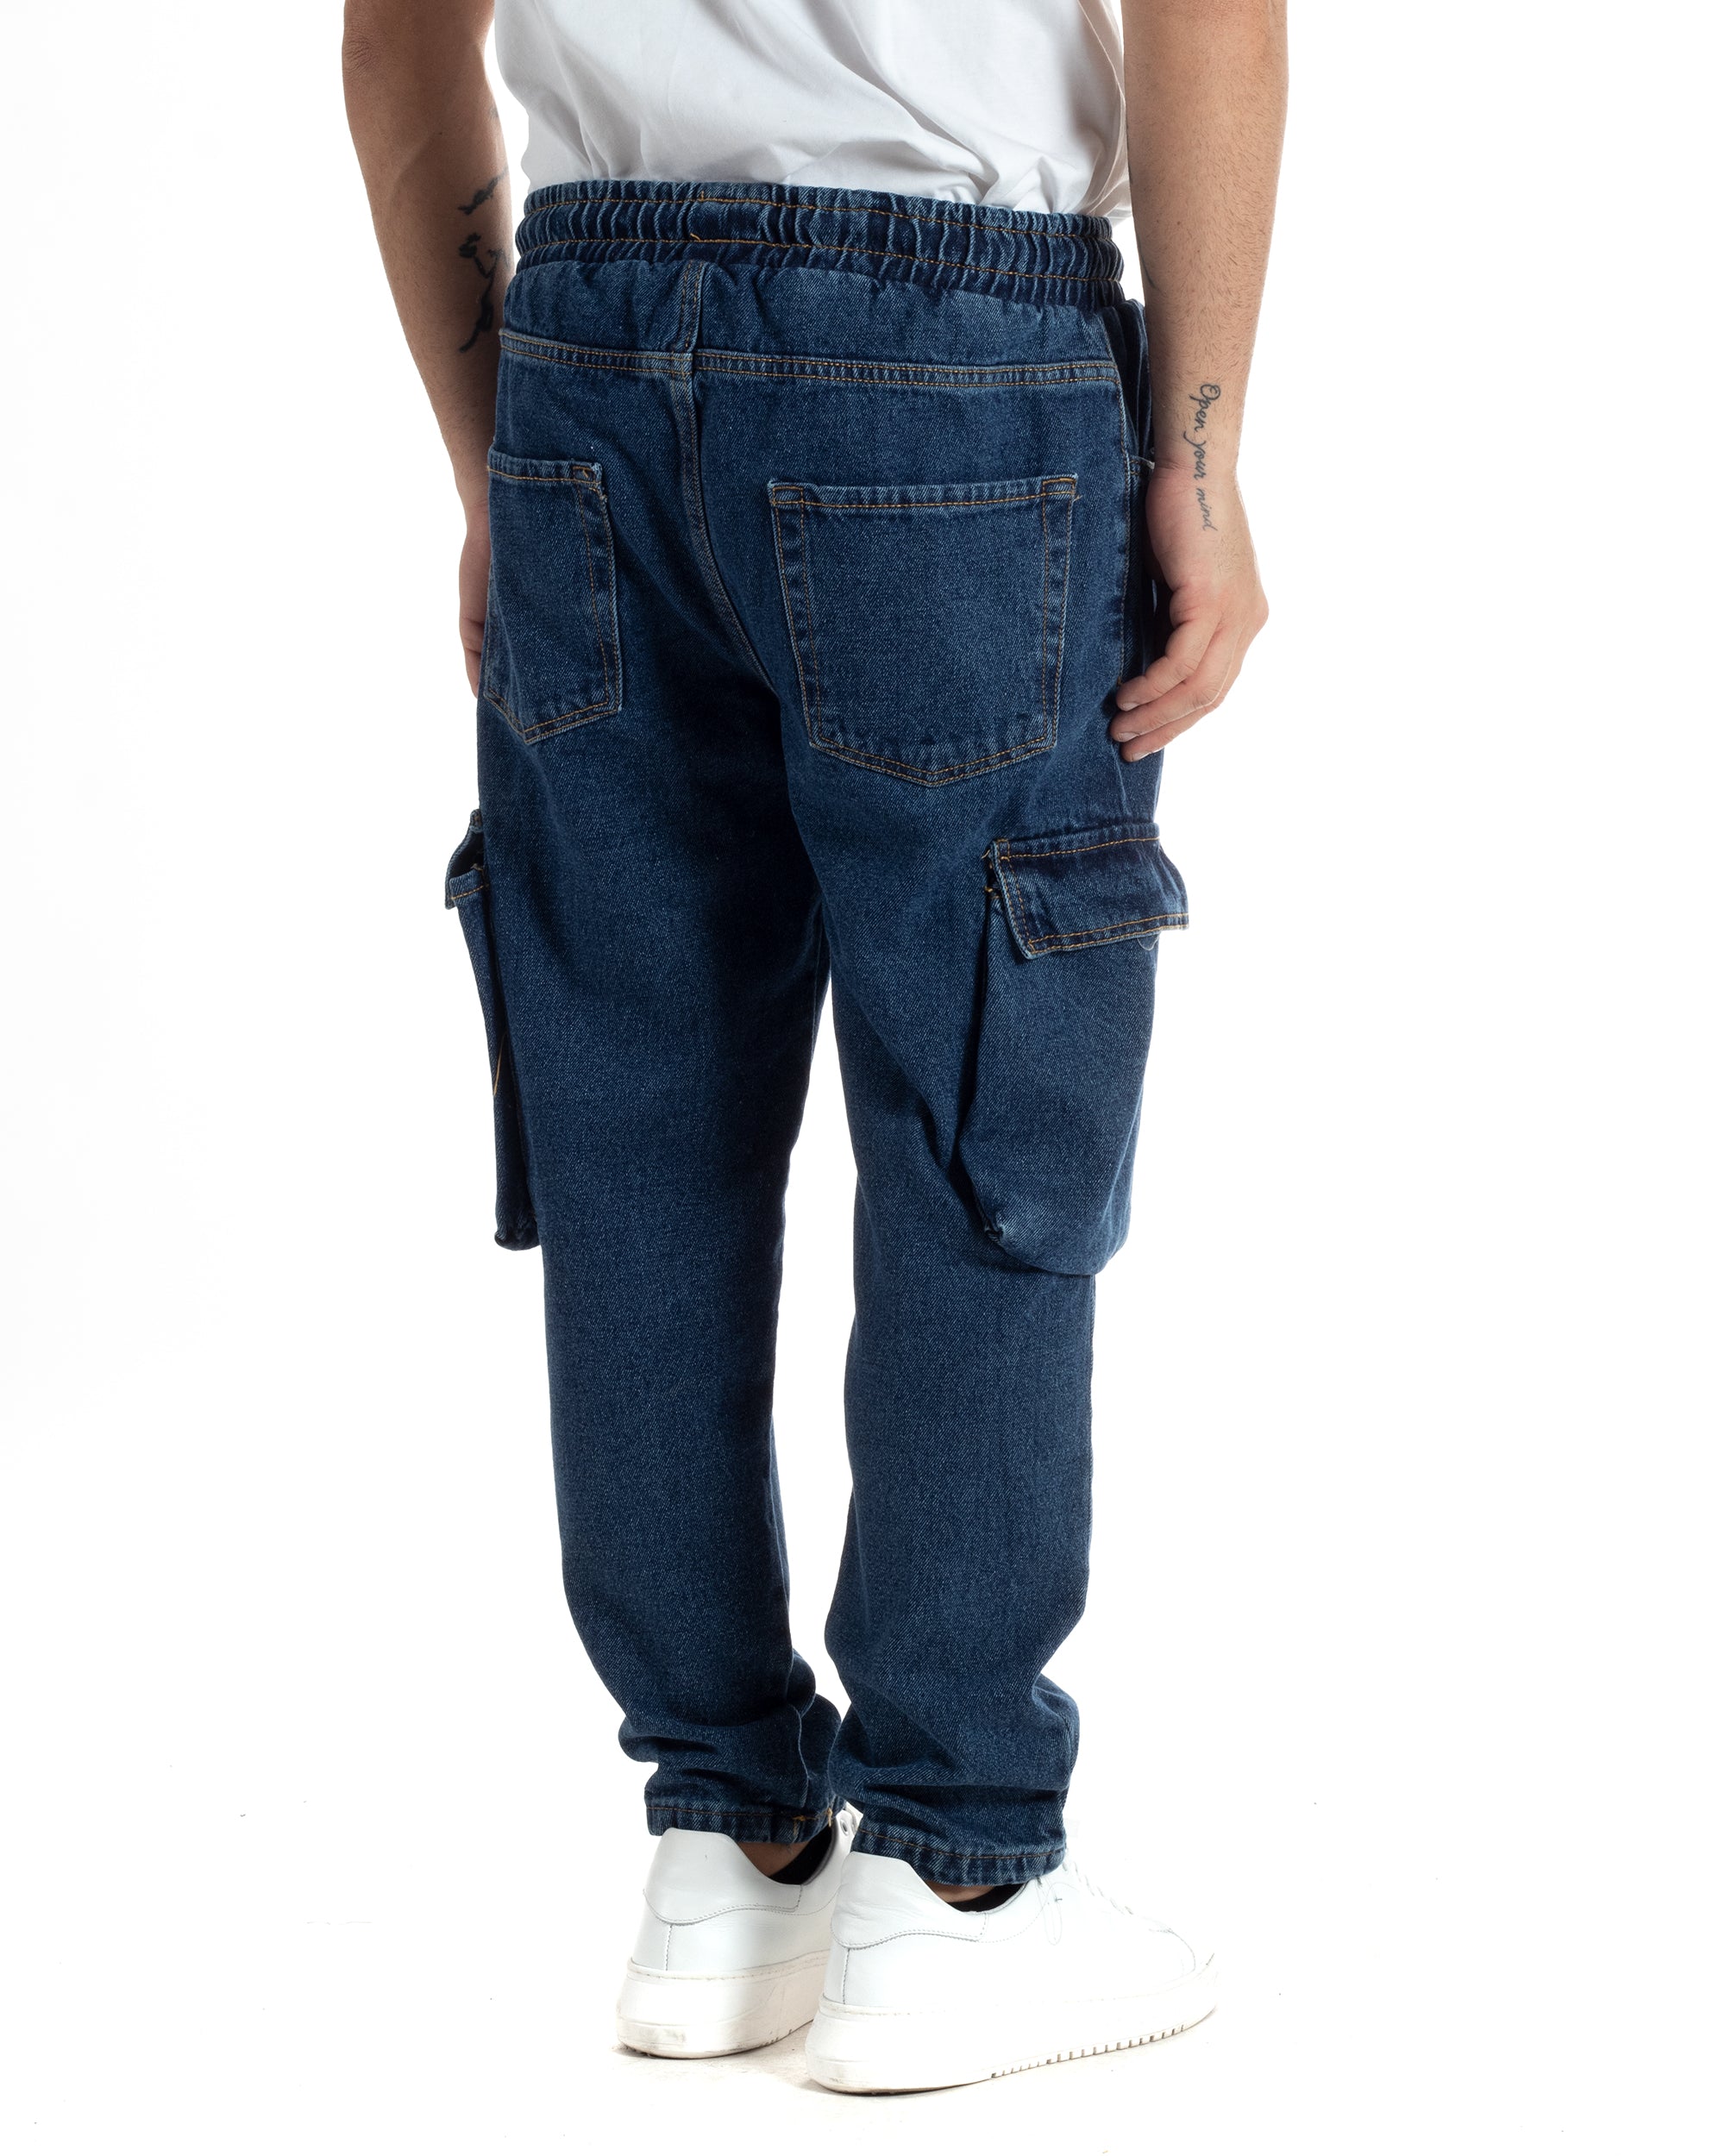 Pantaloni Uomo Pantalaccio Con Tasconi Jeans Cargo Coulisse Denim Scuro Loose Fit GIOSAL-JS1003A